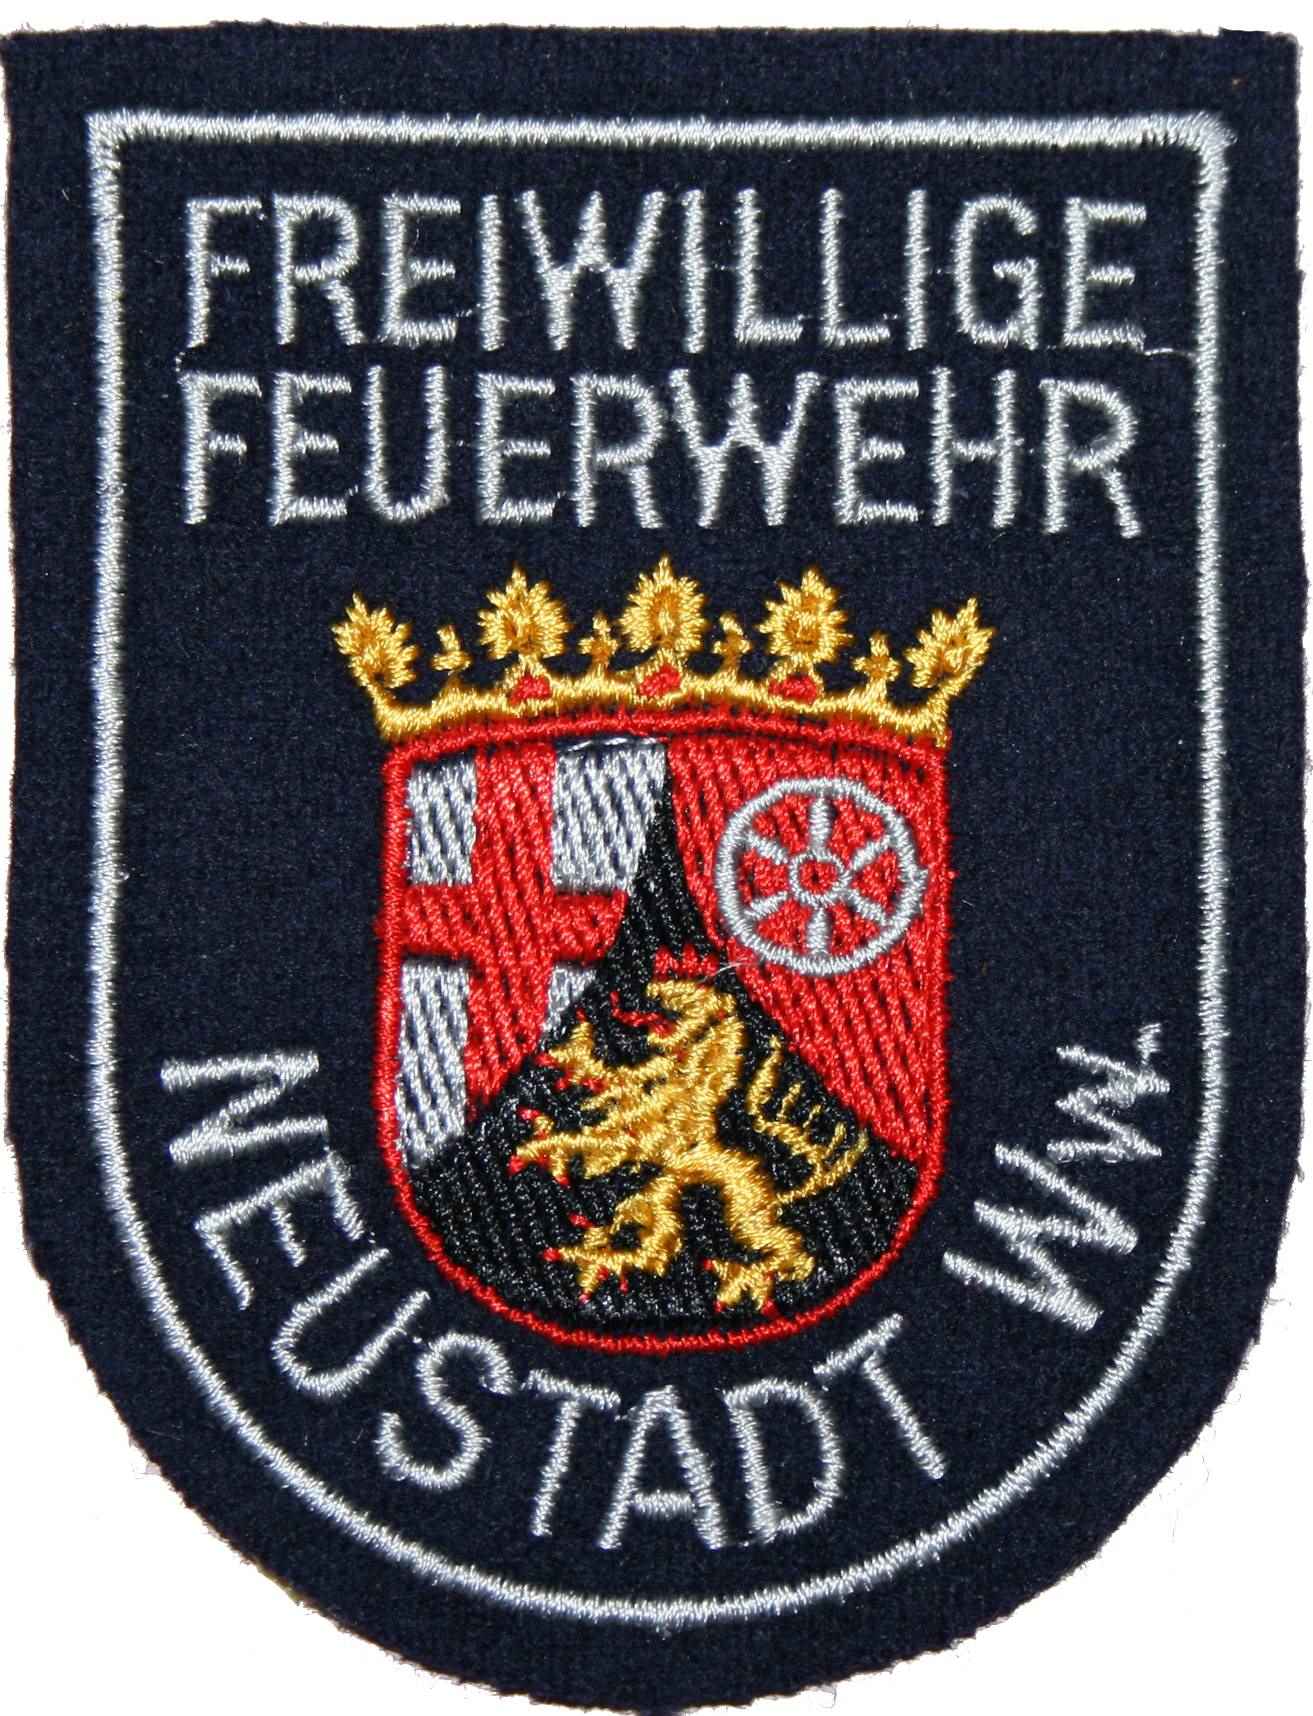 Neustadt Ww.